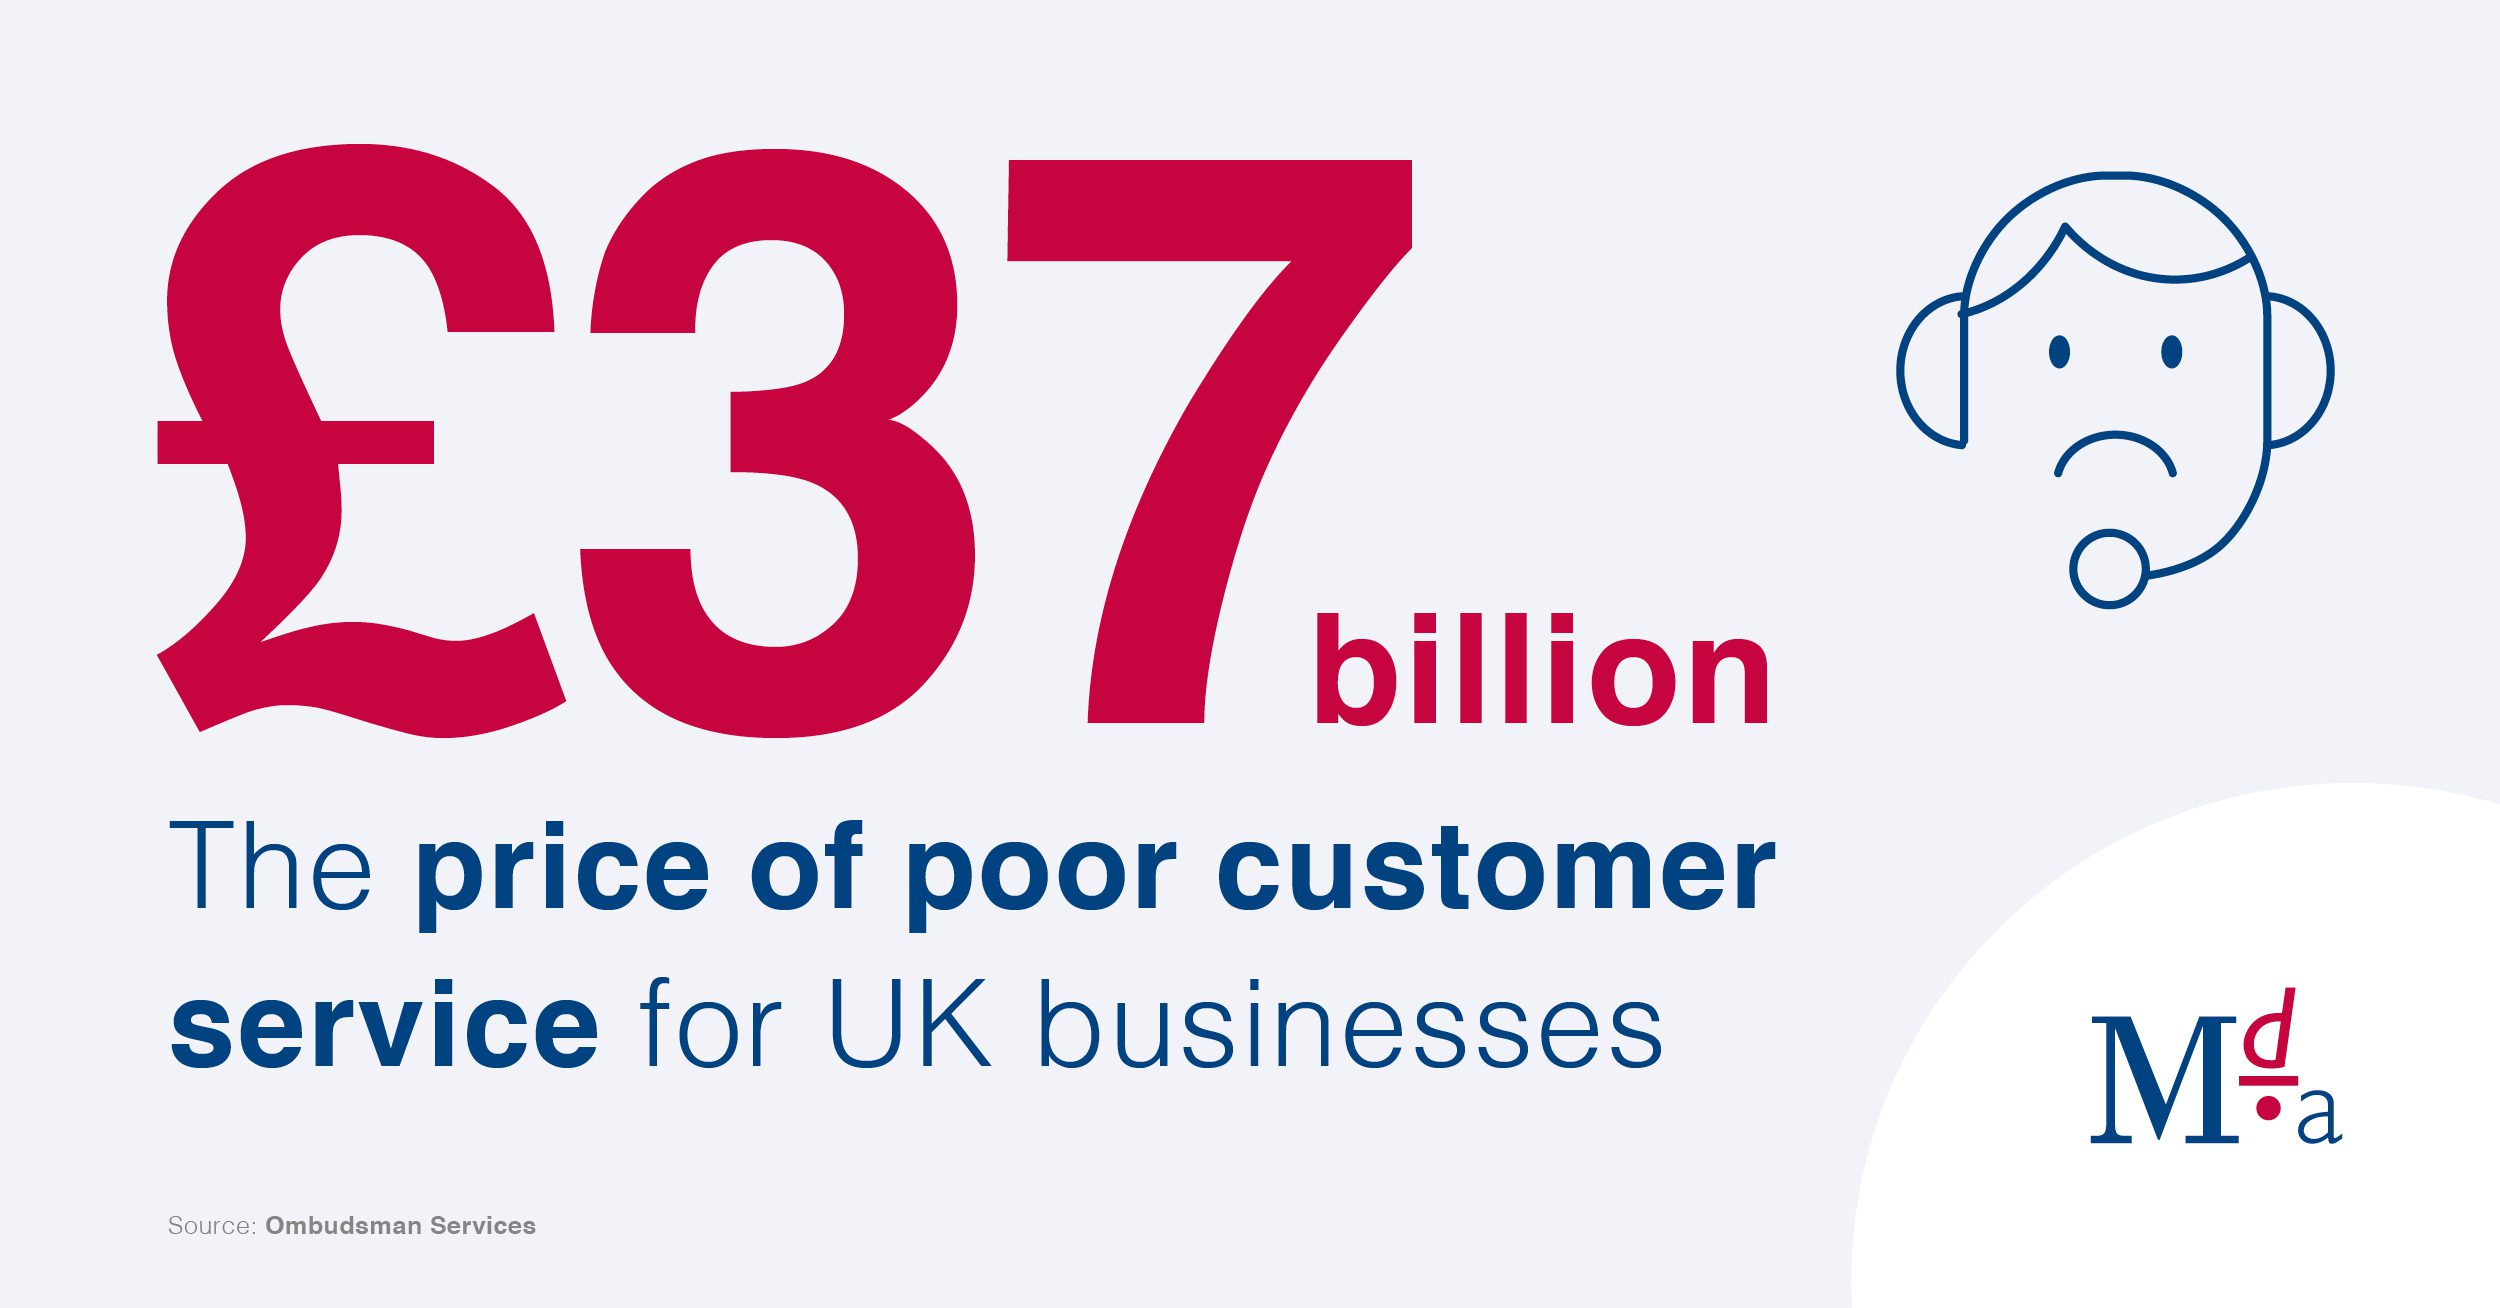 Poor customer service costs UK businesses £37billion - Ombudsman Services